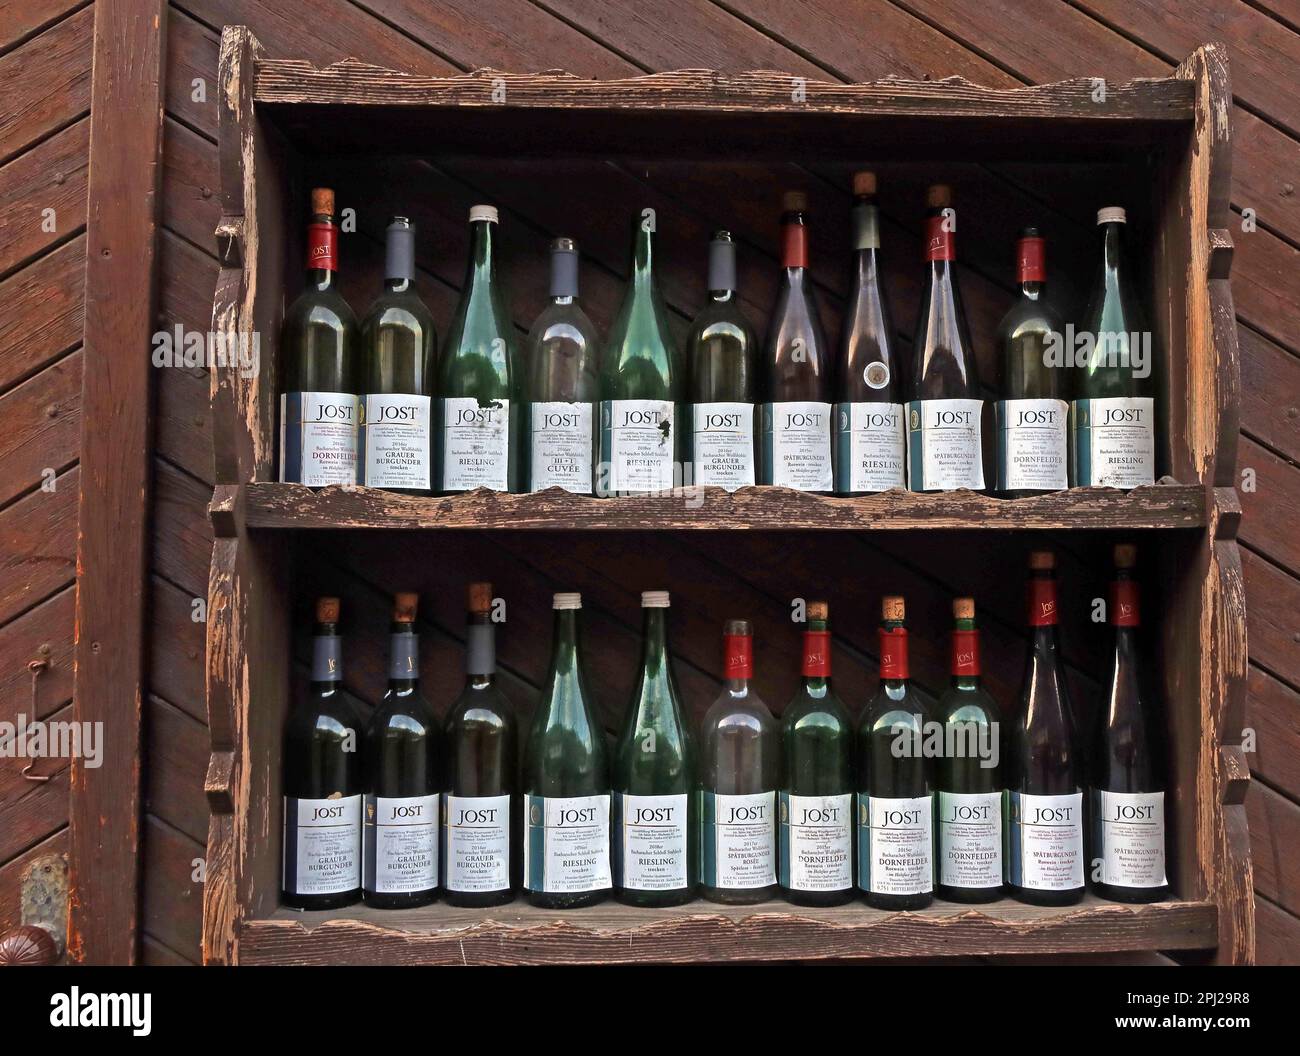 Jost Dry Riesling, Spatburgunder Rosee, Dornfelder, Rotwein wine bottles, Bacharach (Bacharach am Rhein),  Mainz-Bingen district, Germany Stock Photo